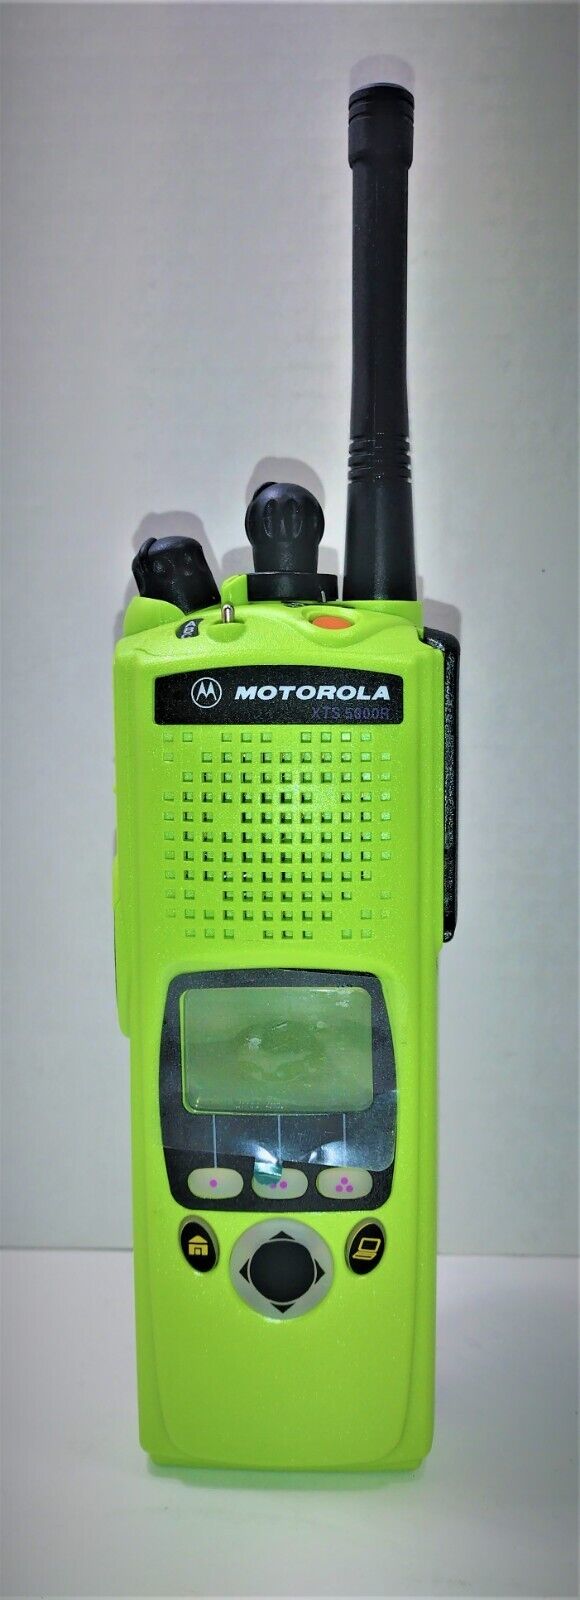 MOTOROLA XTS5000 UHF 380-470mhz P25 TWO WAY DIGITAL RADIO H18QDF9PW6AN W/AES-256